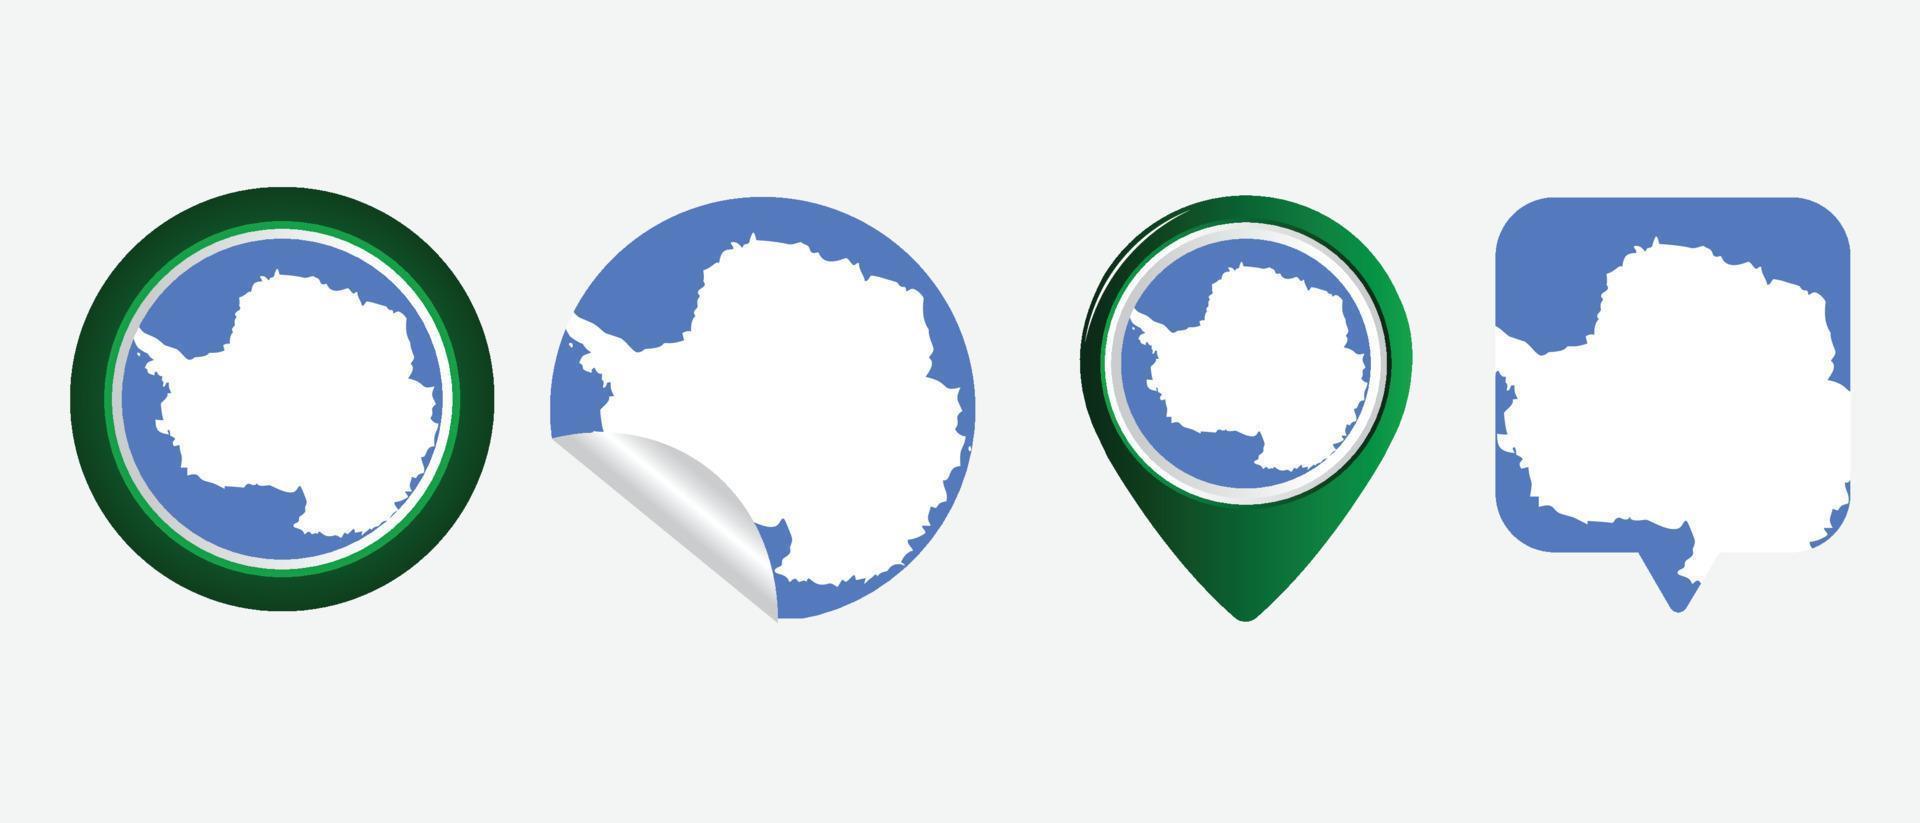 Antarctica flag. flat icon symbol vector illustration